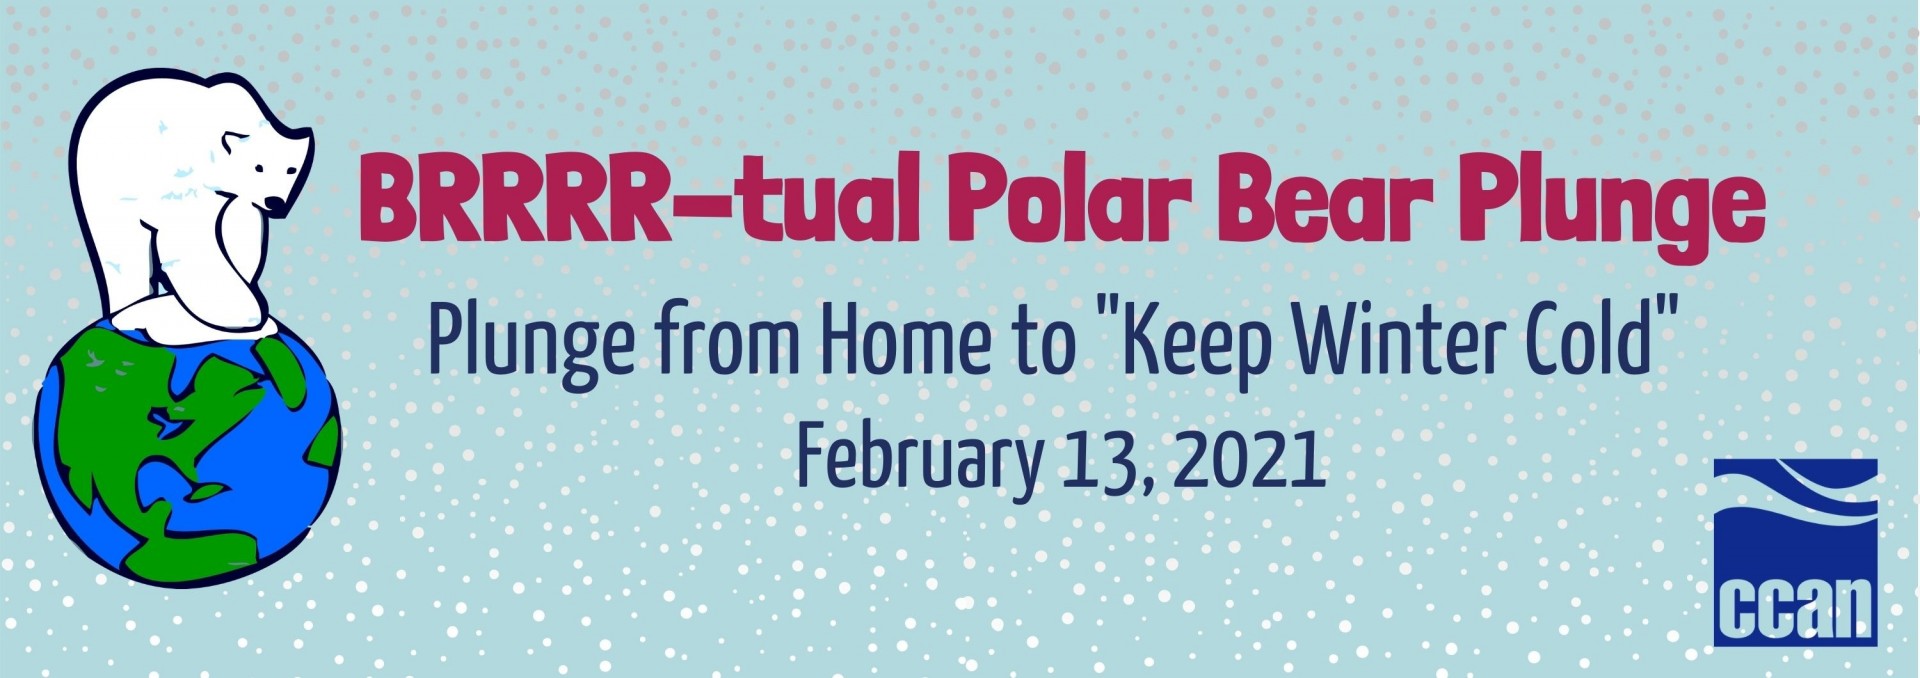 BRRRR-tual Polar Bear Plunge 2021